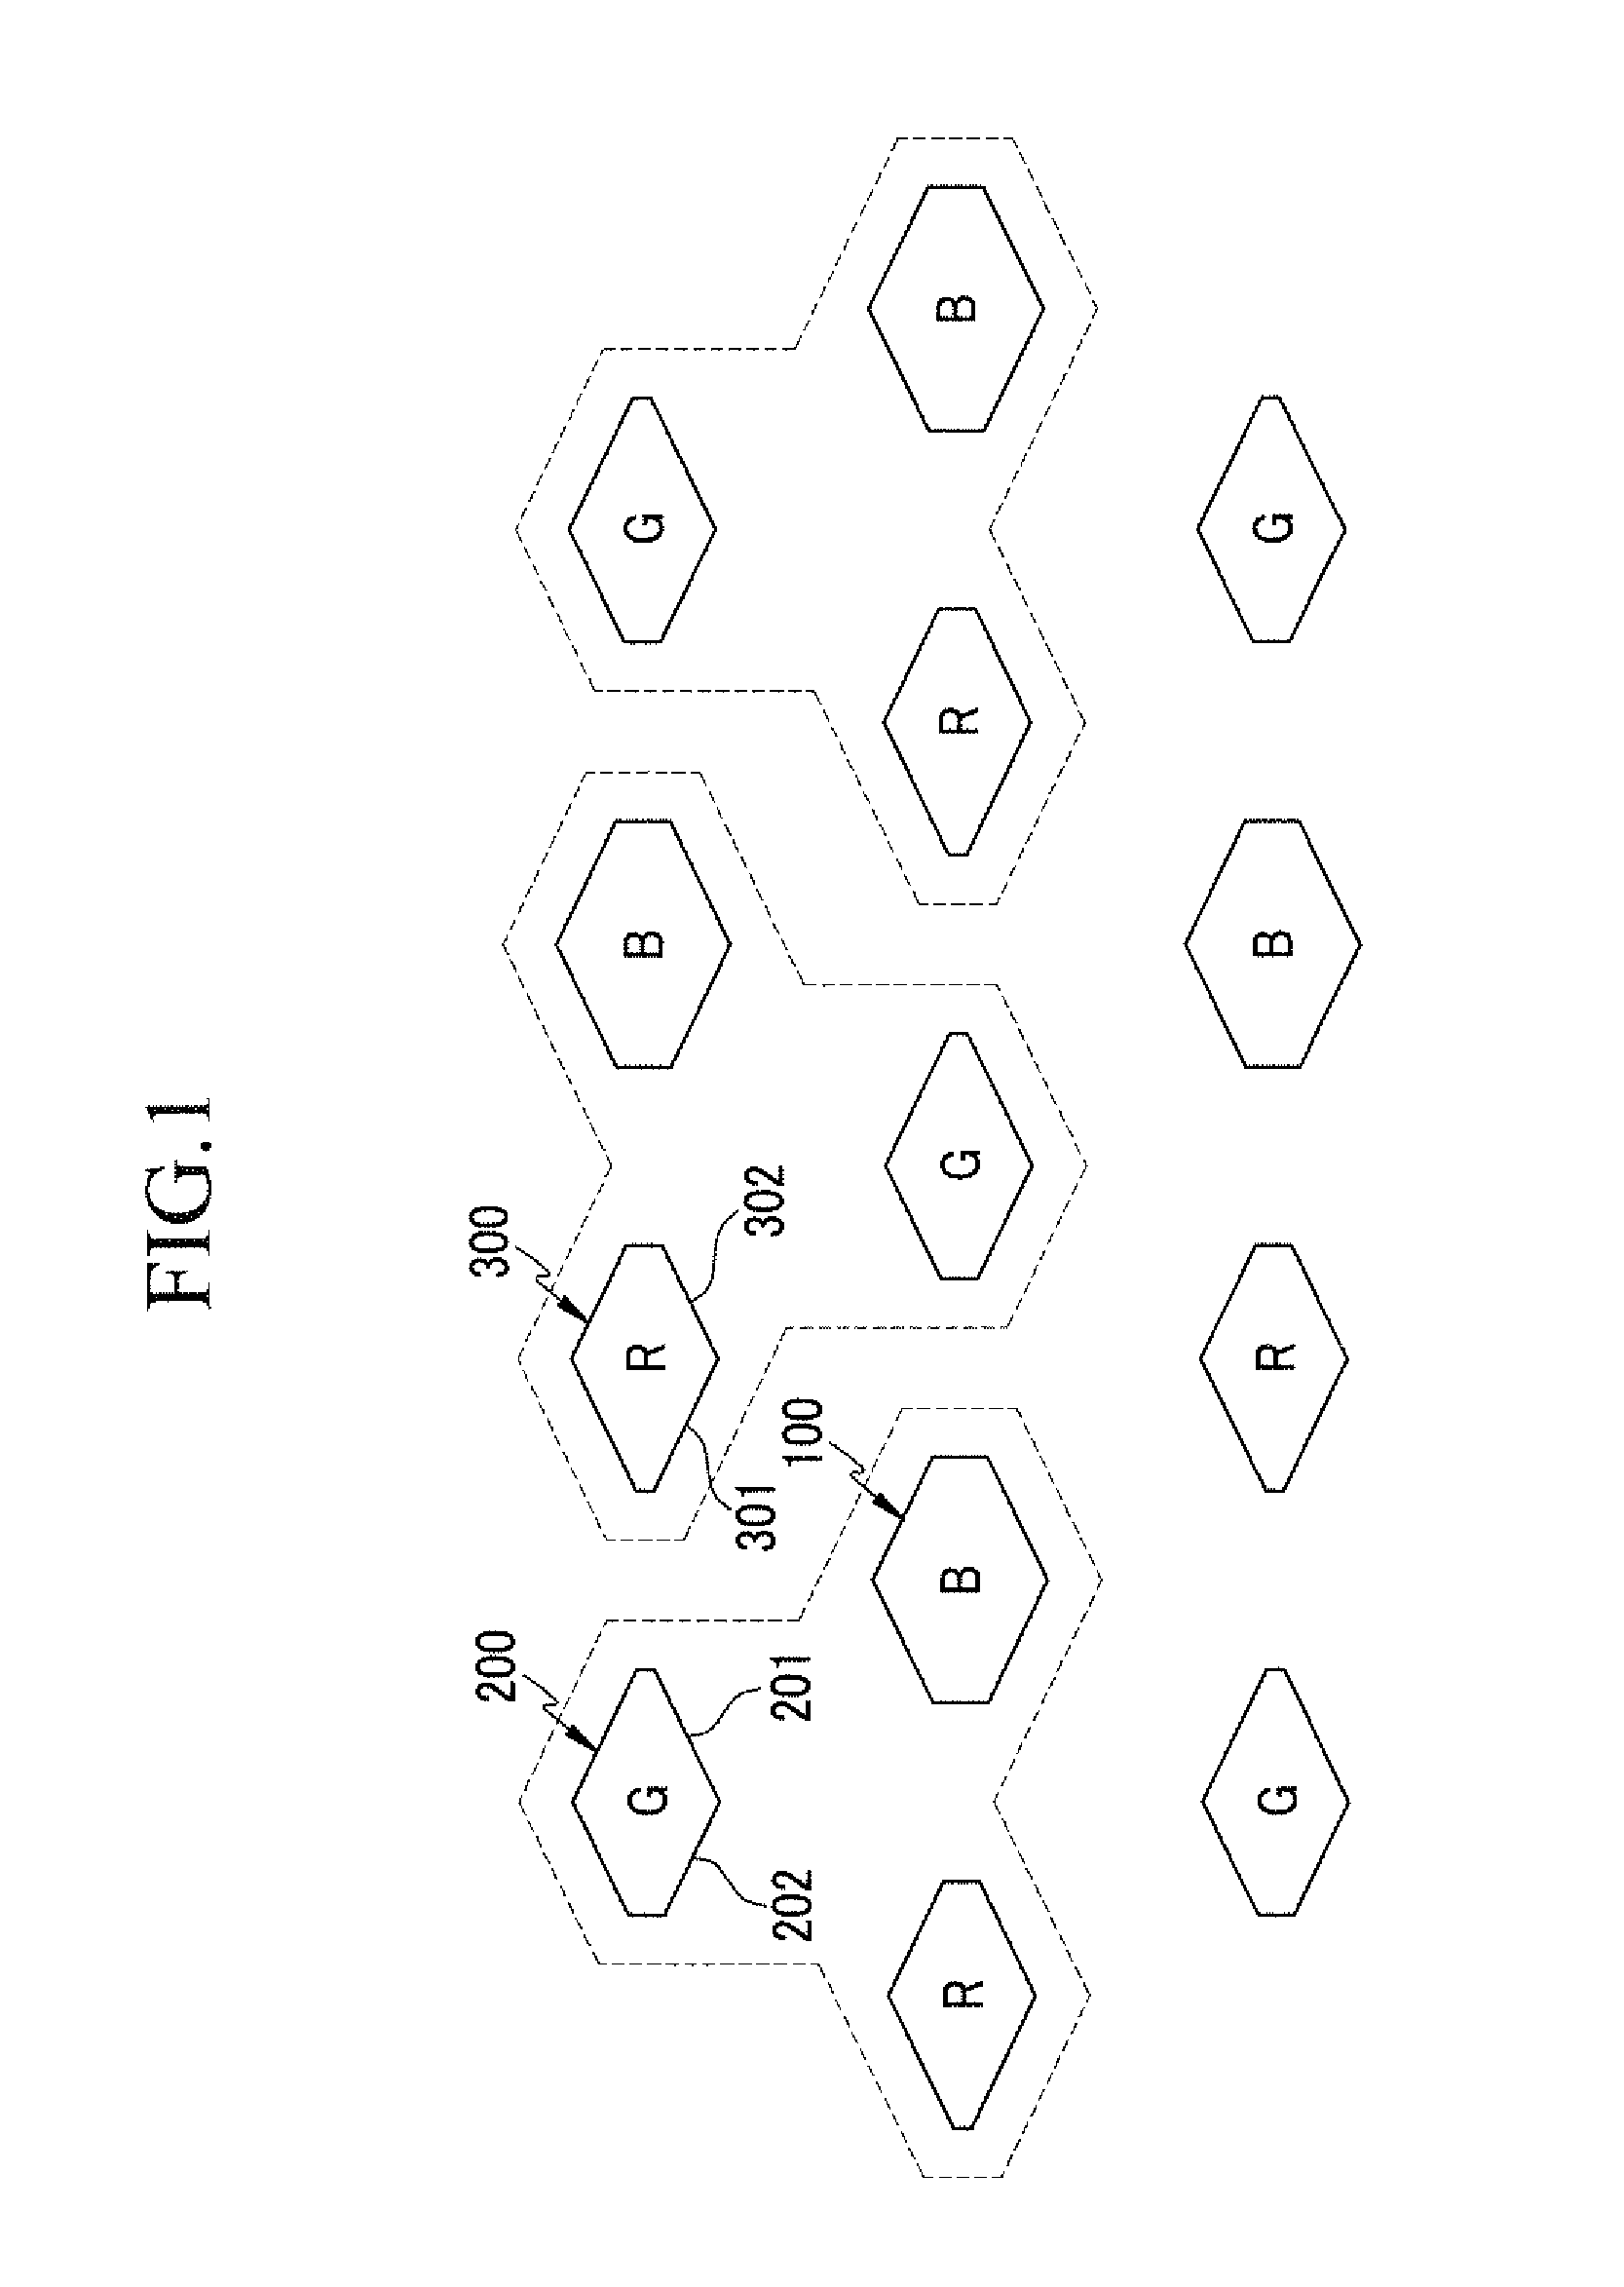 Pixel arrangement structure for organic light emitting diode display